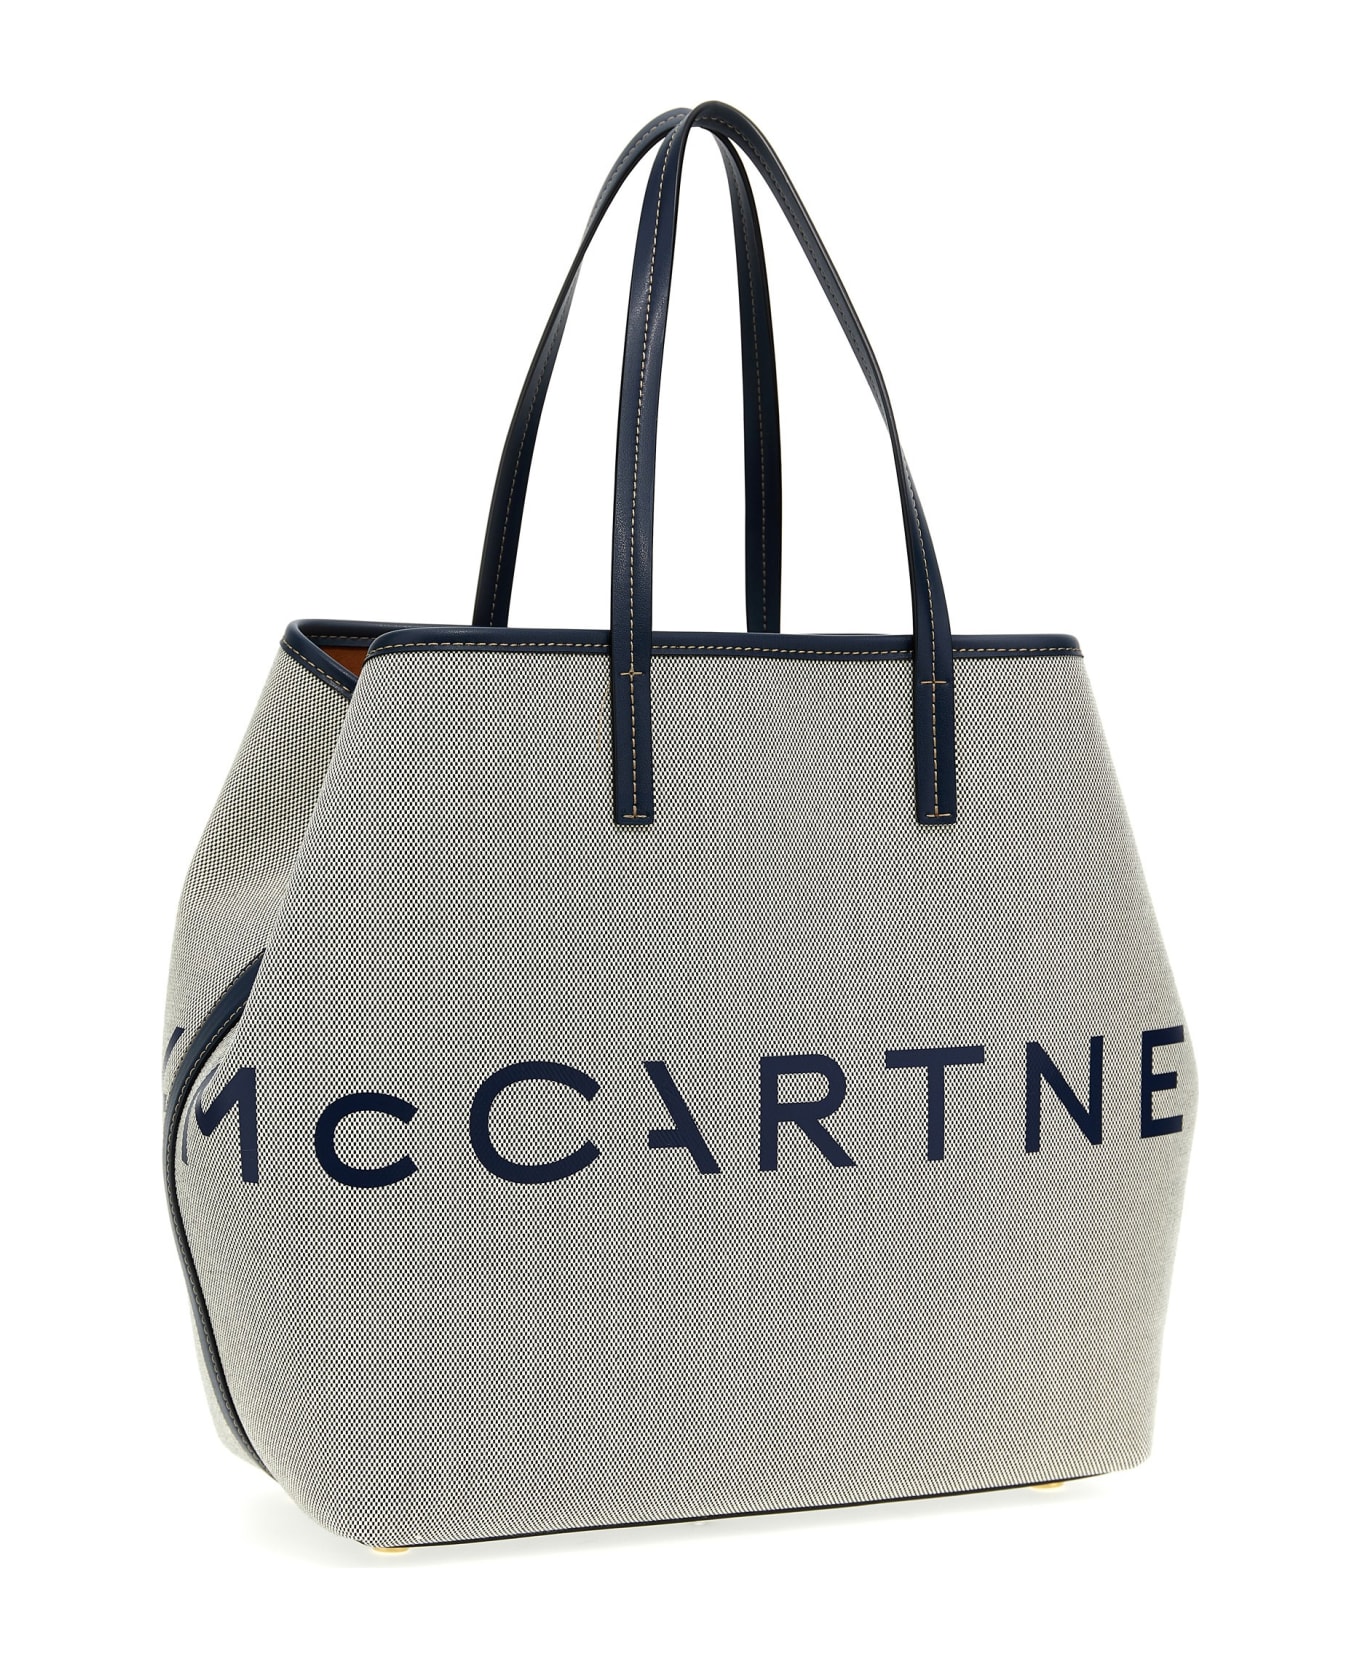 Stella McCartney 'logo' Shopping Bag - Blue